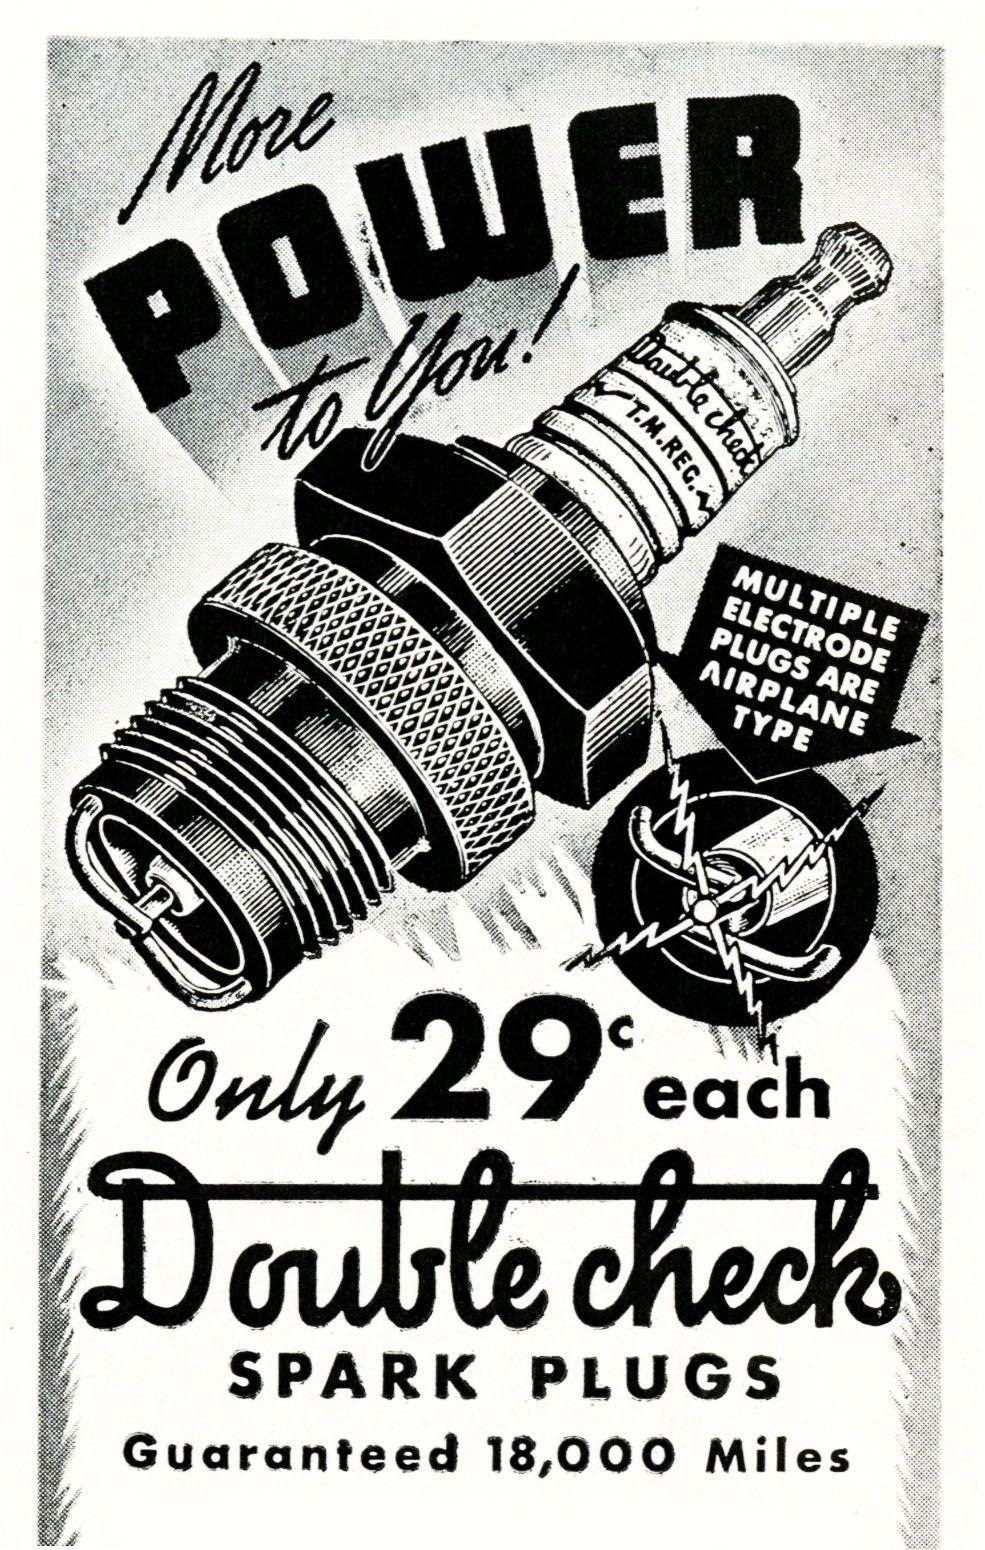 Vintage Spark Plug Logo - Power Spark Plugs! | POSTER VINTAGE | Pinterest | Spark plug, Cars ...